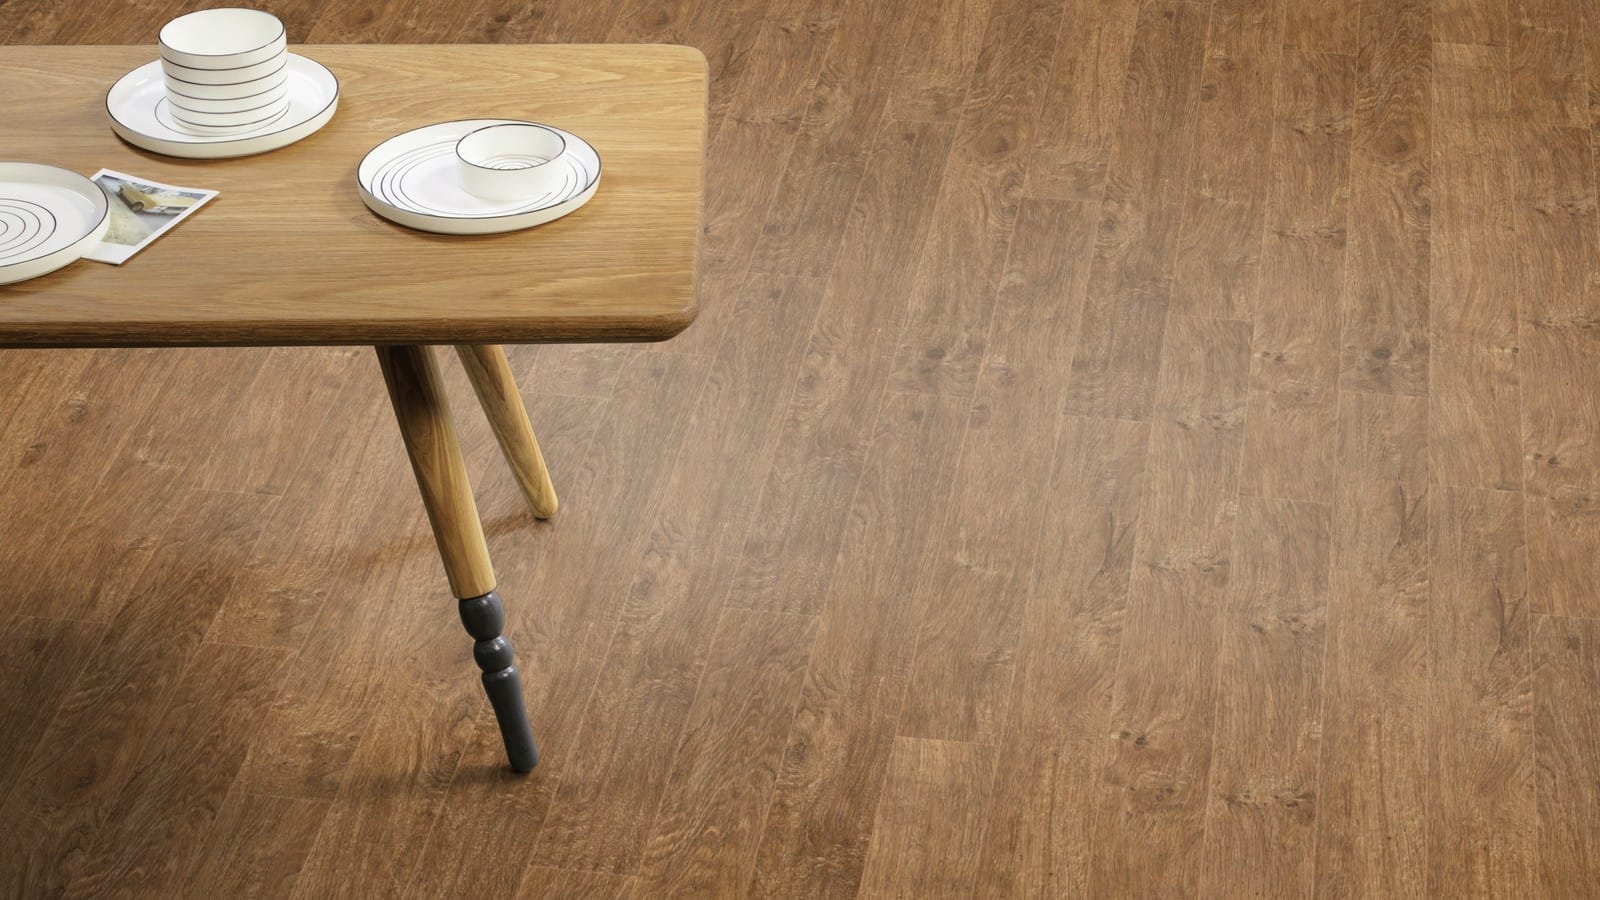 The Stripwood design of Varnished Oak luxury vinyl tile by Amtico